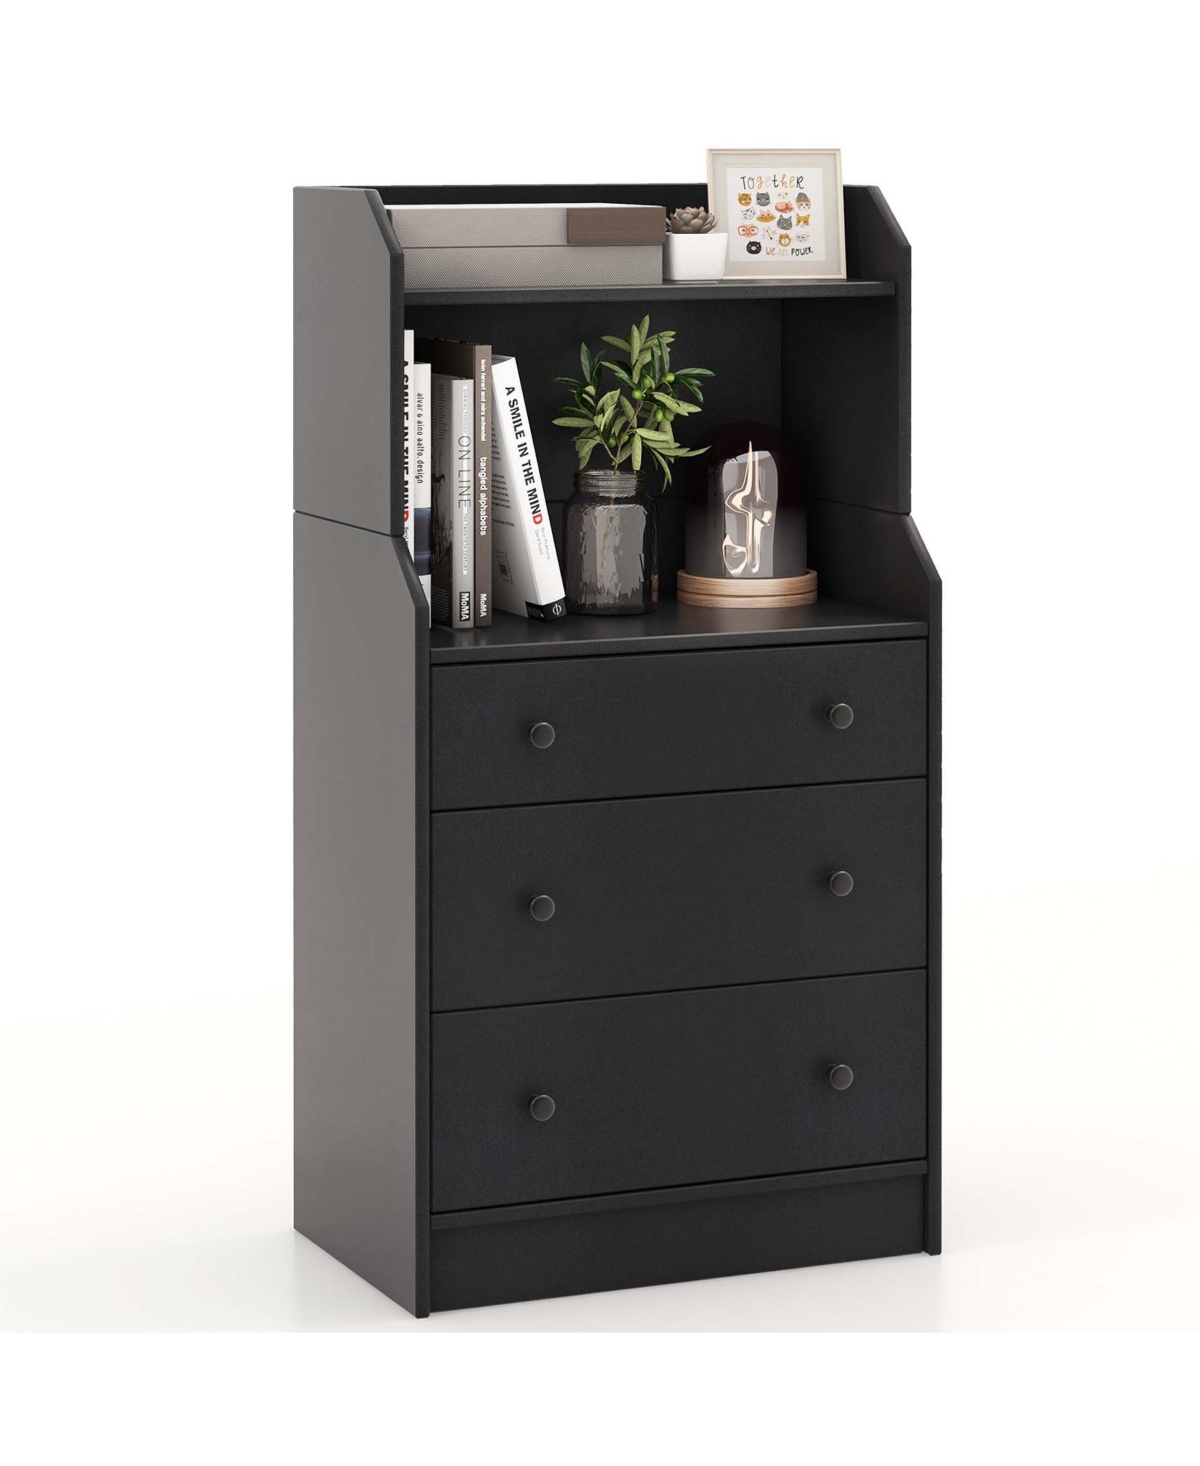 3-Drawer Dresser 44" Tall Wood Storage Organizer Chest with 2 Open Shelves - Black